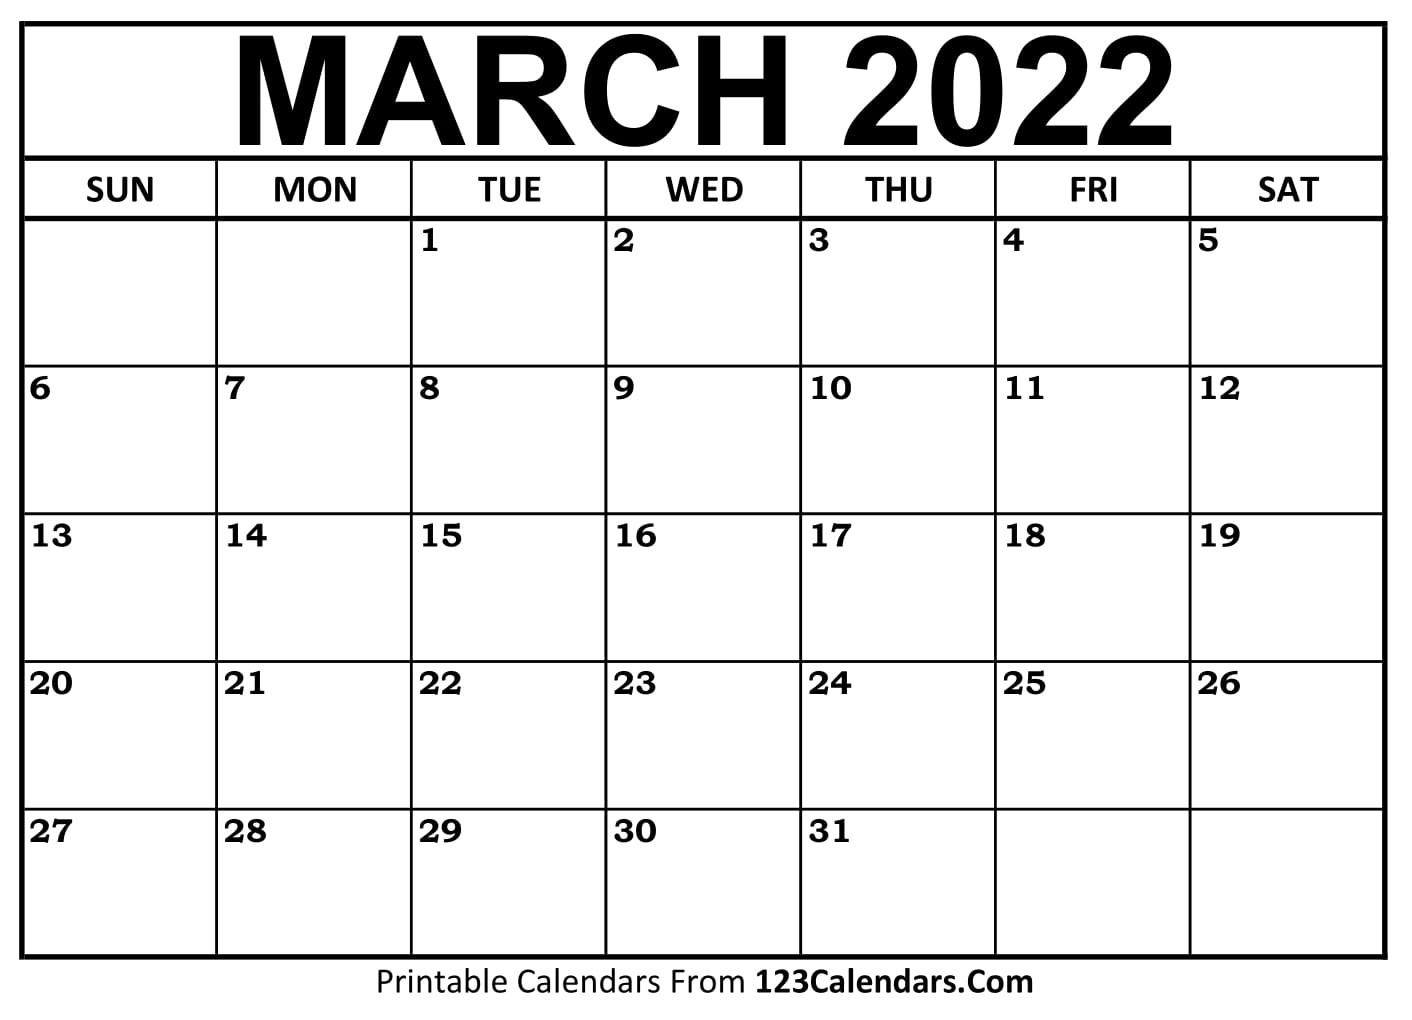 March Calendar For 2022 Printable March 2022 Calendar Templates - 123Calendars.com